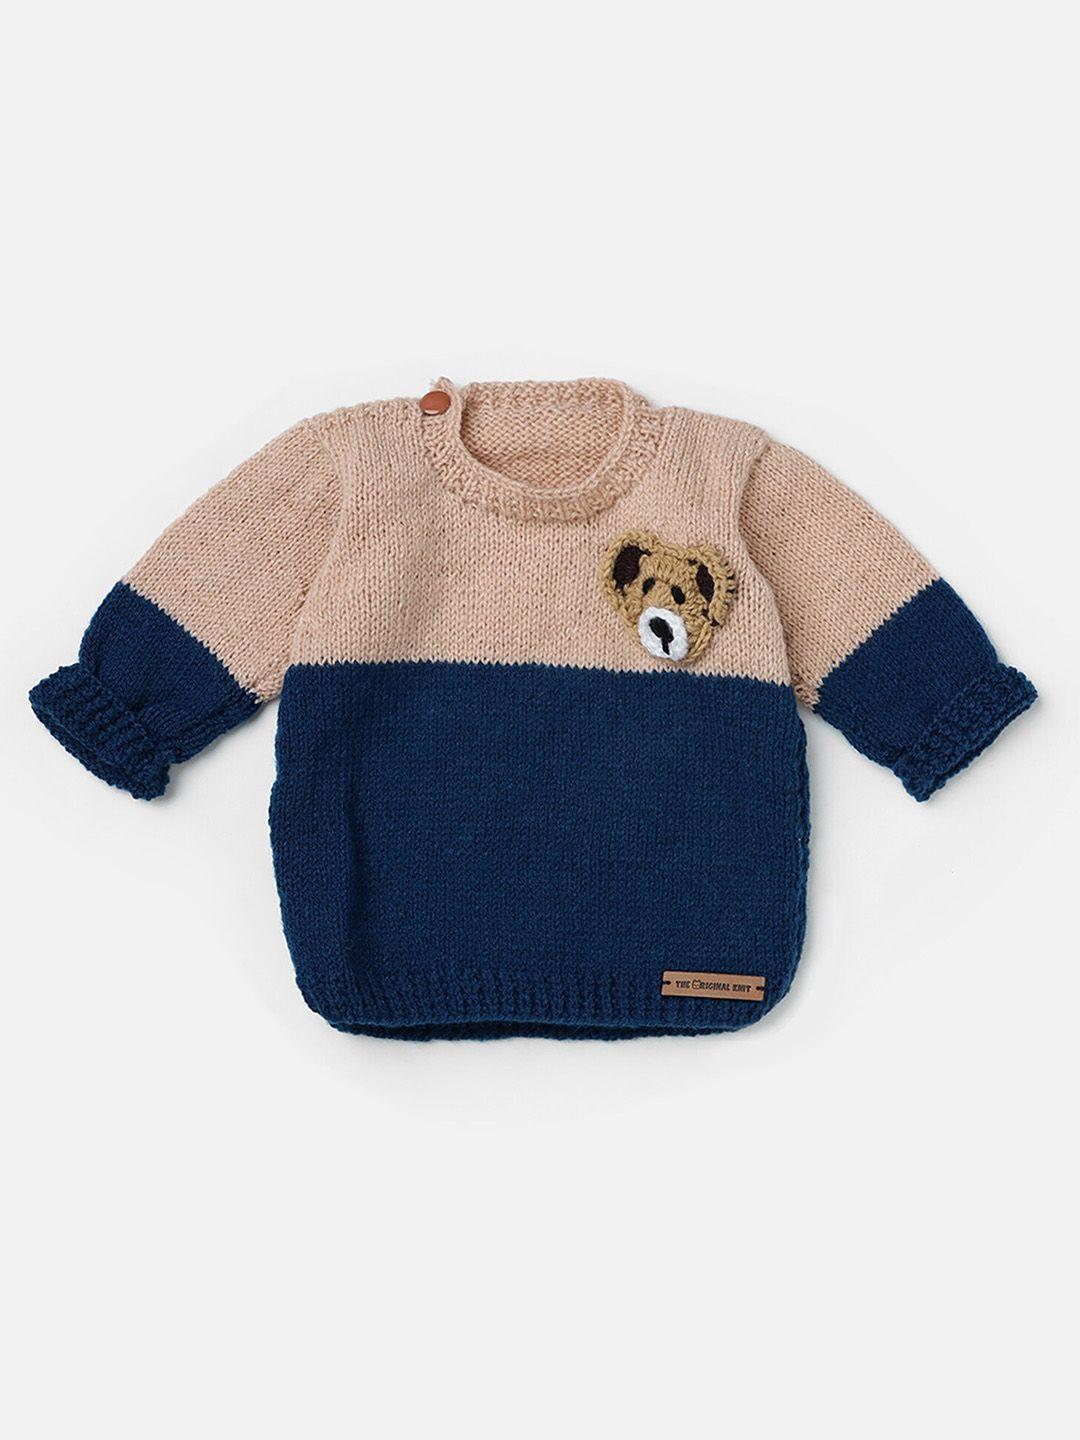 the original knit unisex kids navy blue & beige colourblocked pullover with applique detail